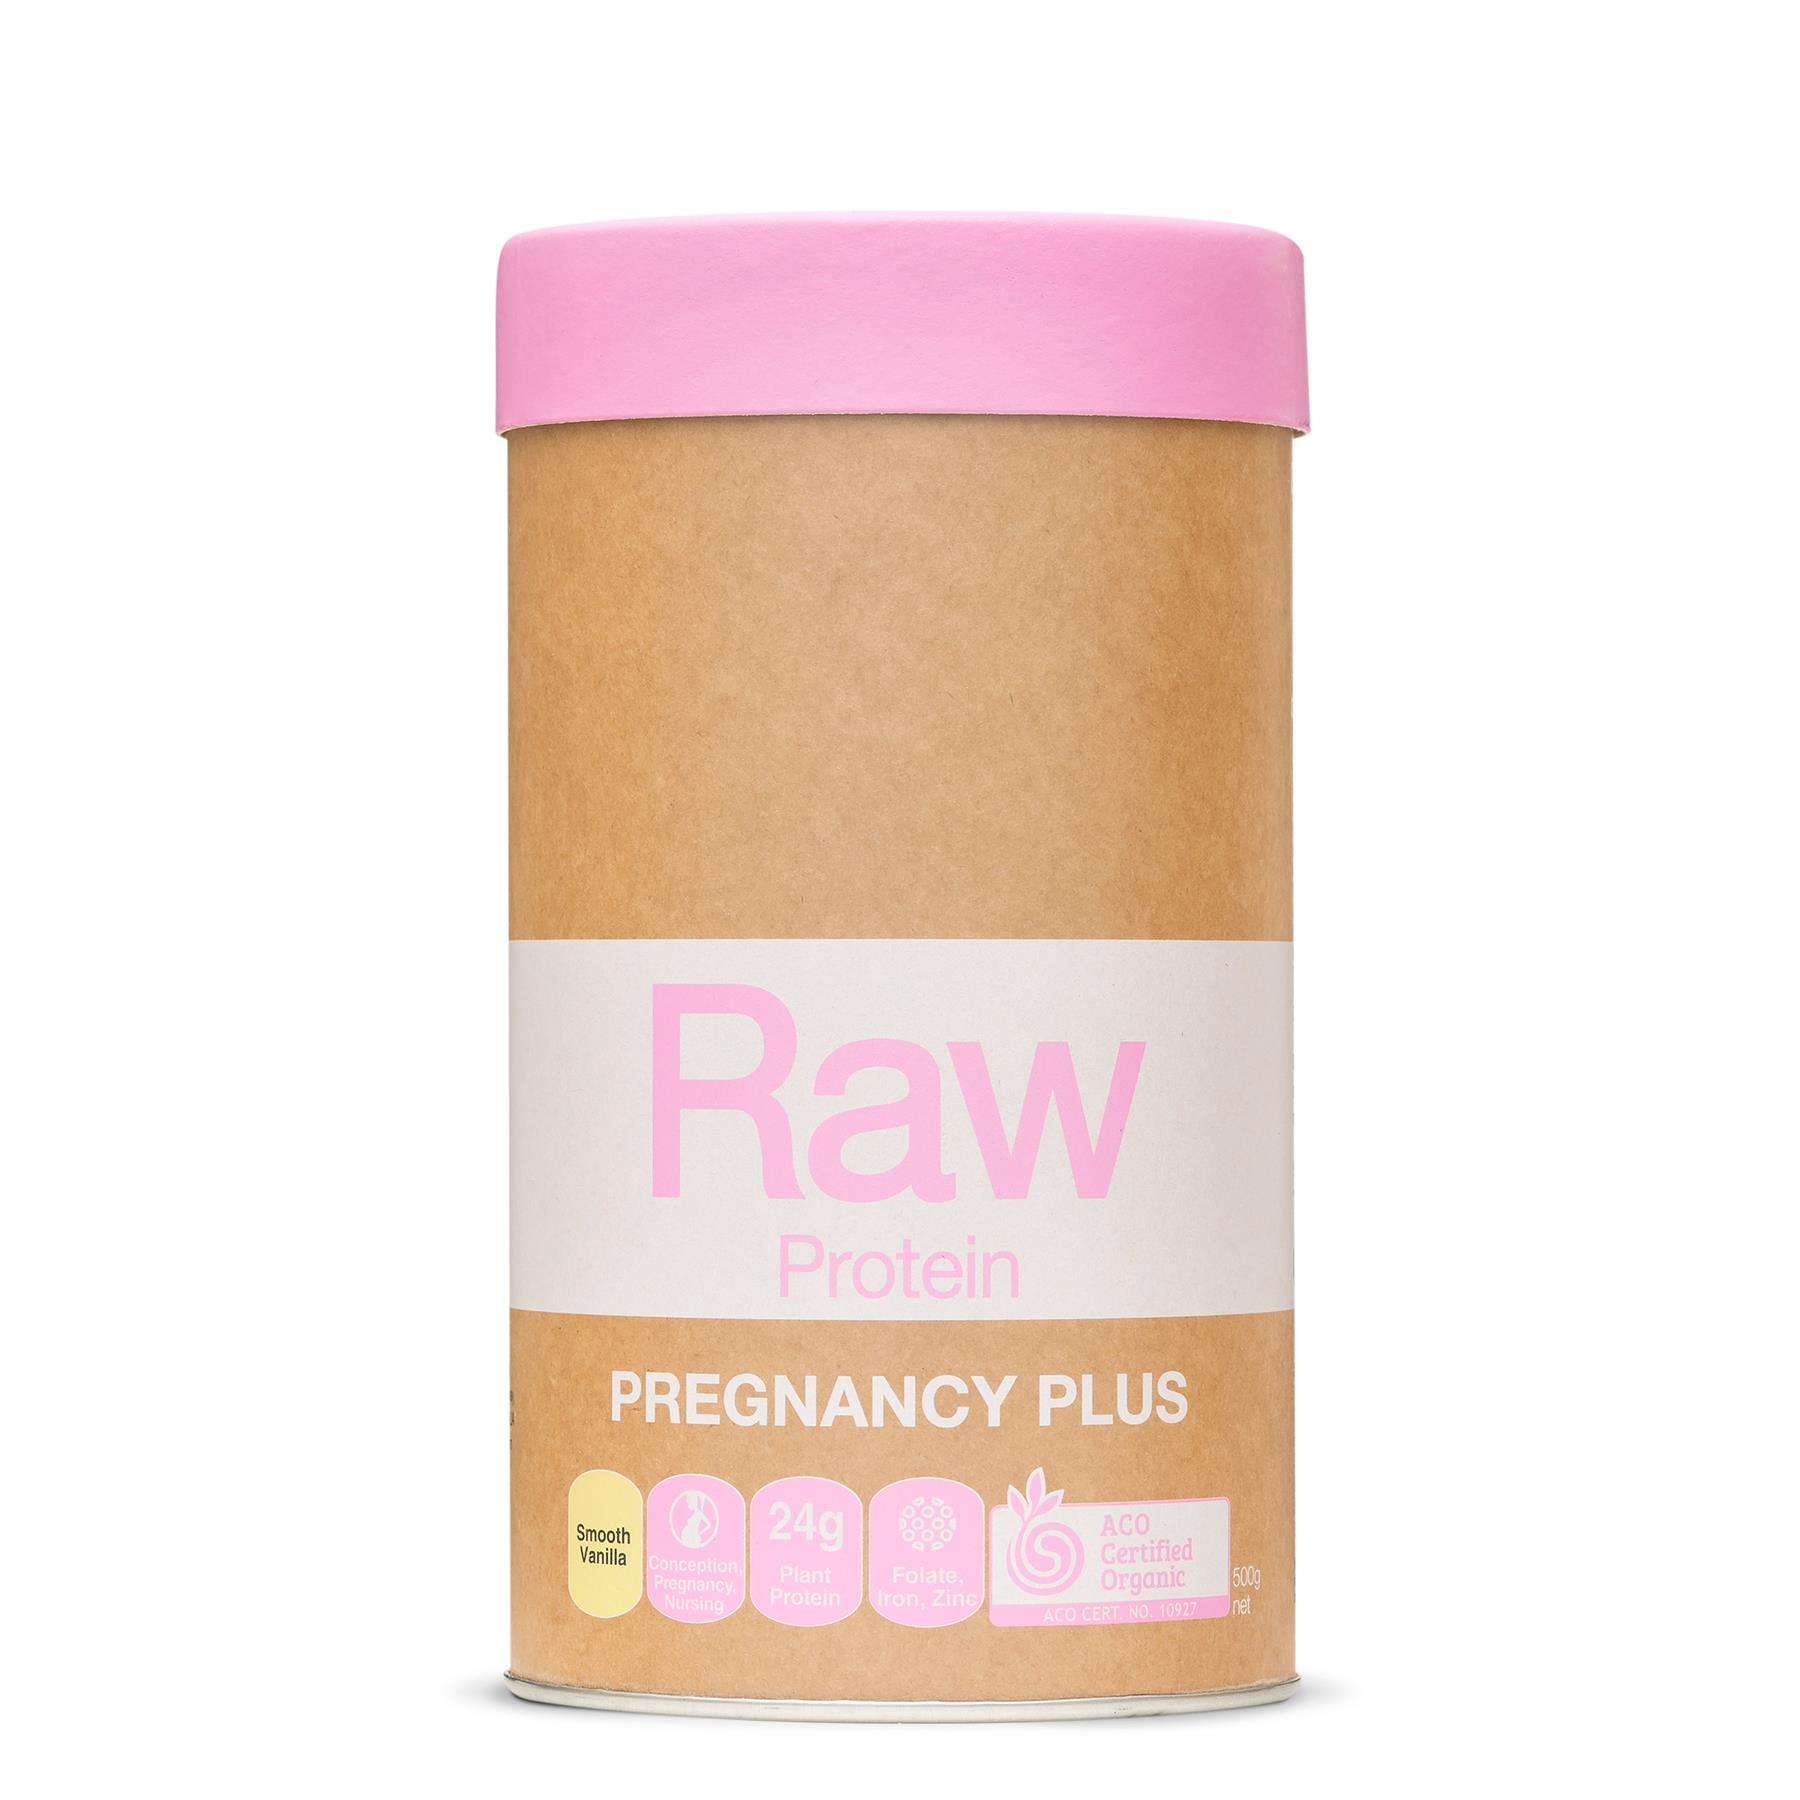 Raw Protein Pregnancy Plus Smooth Vanilla 500g